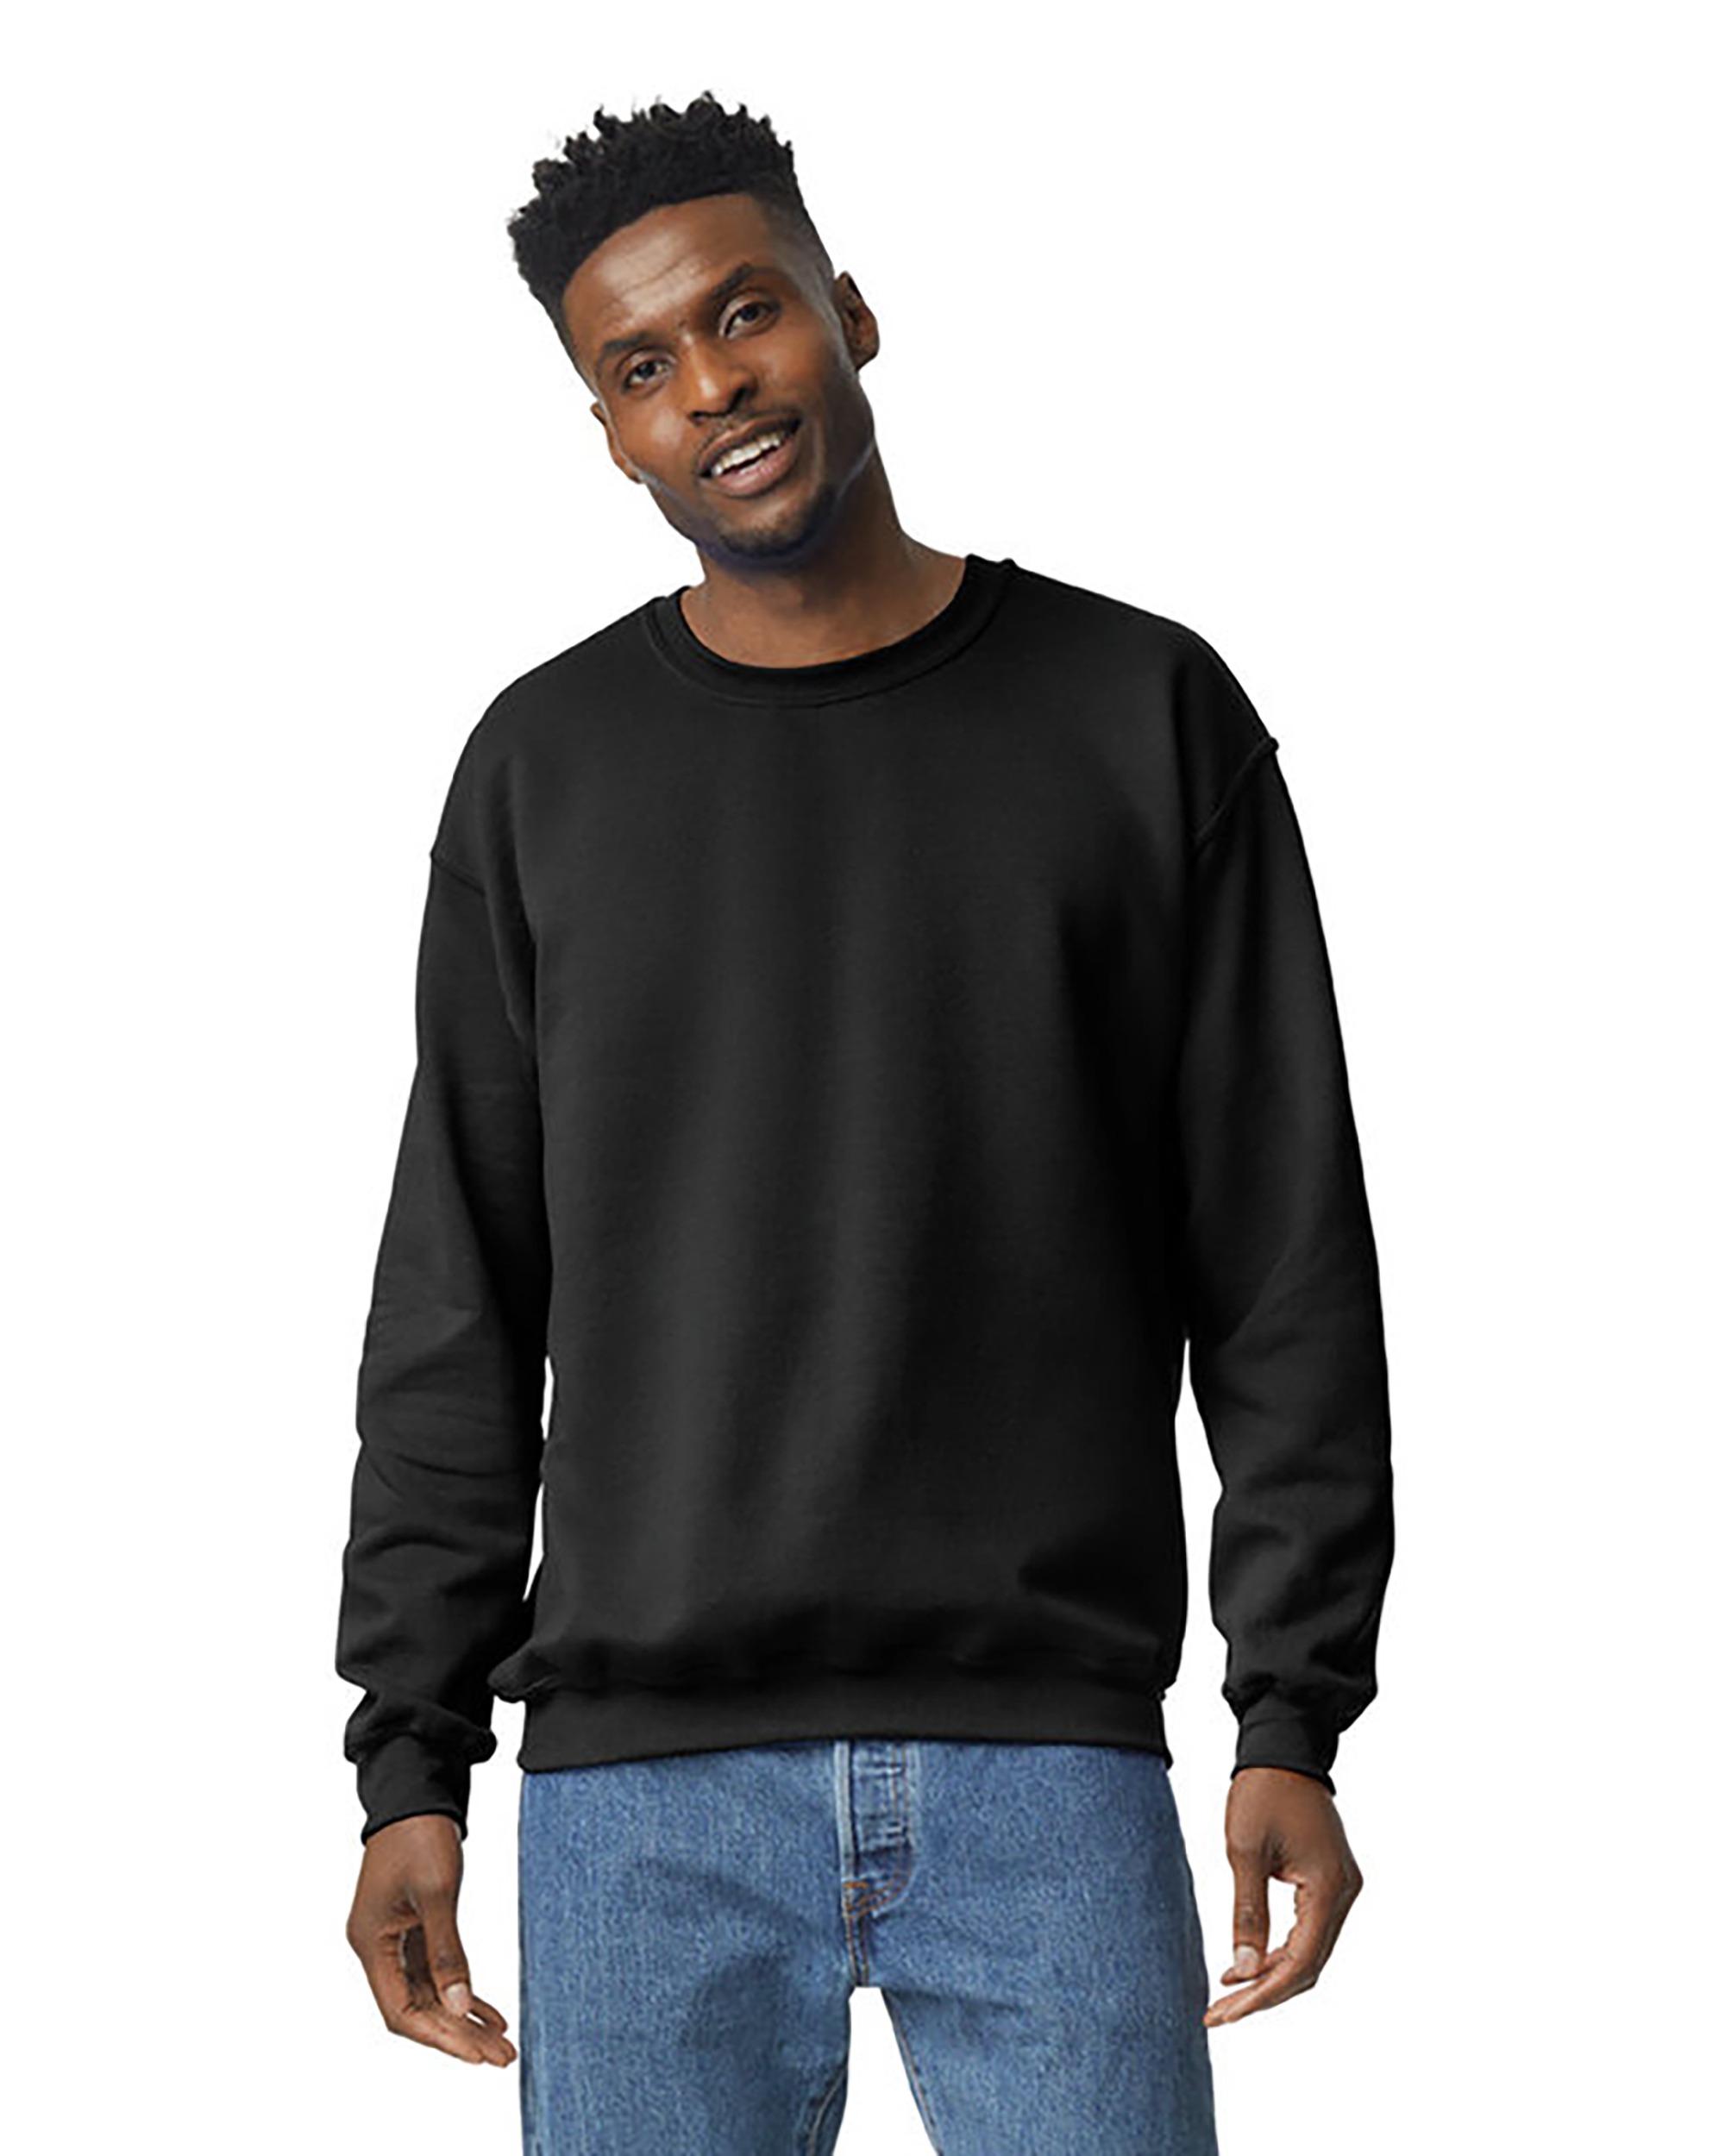 GD360 - Heavy Blend™ Adult Crewneck Sweatshirt - One Stop